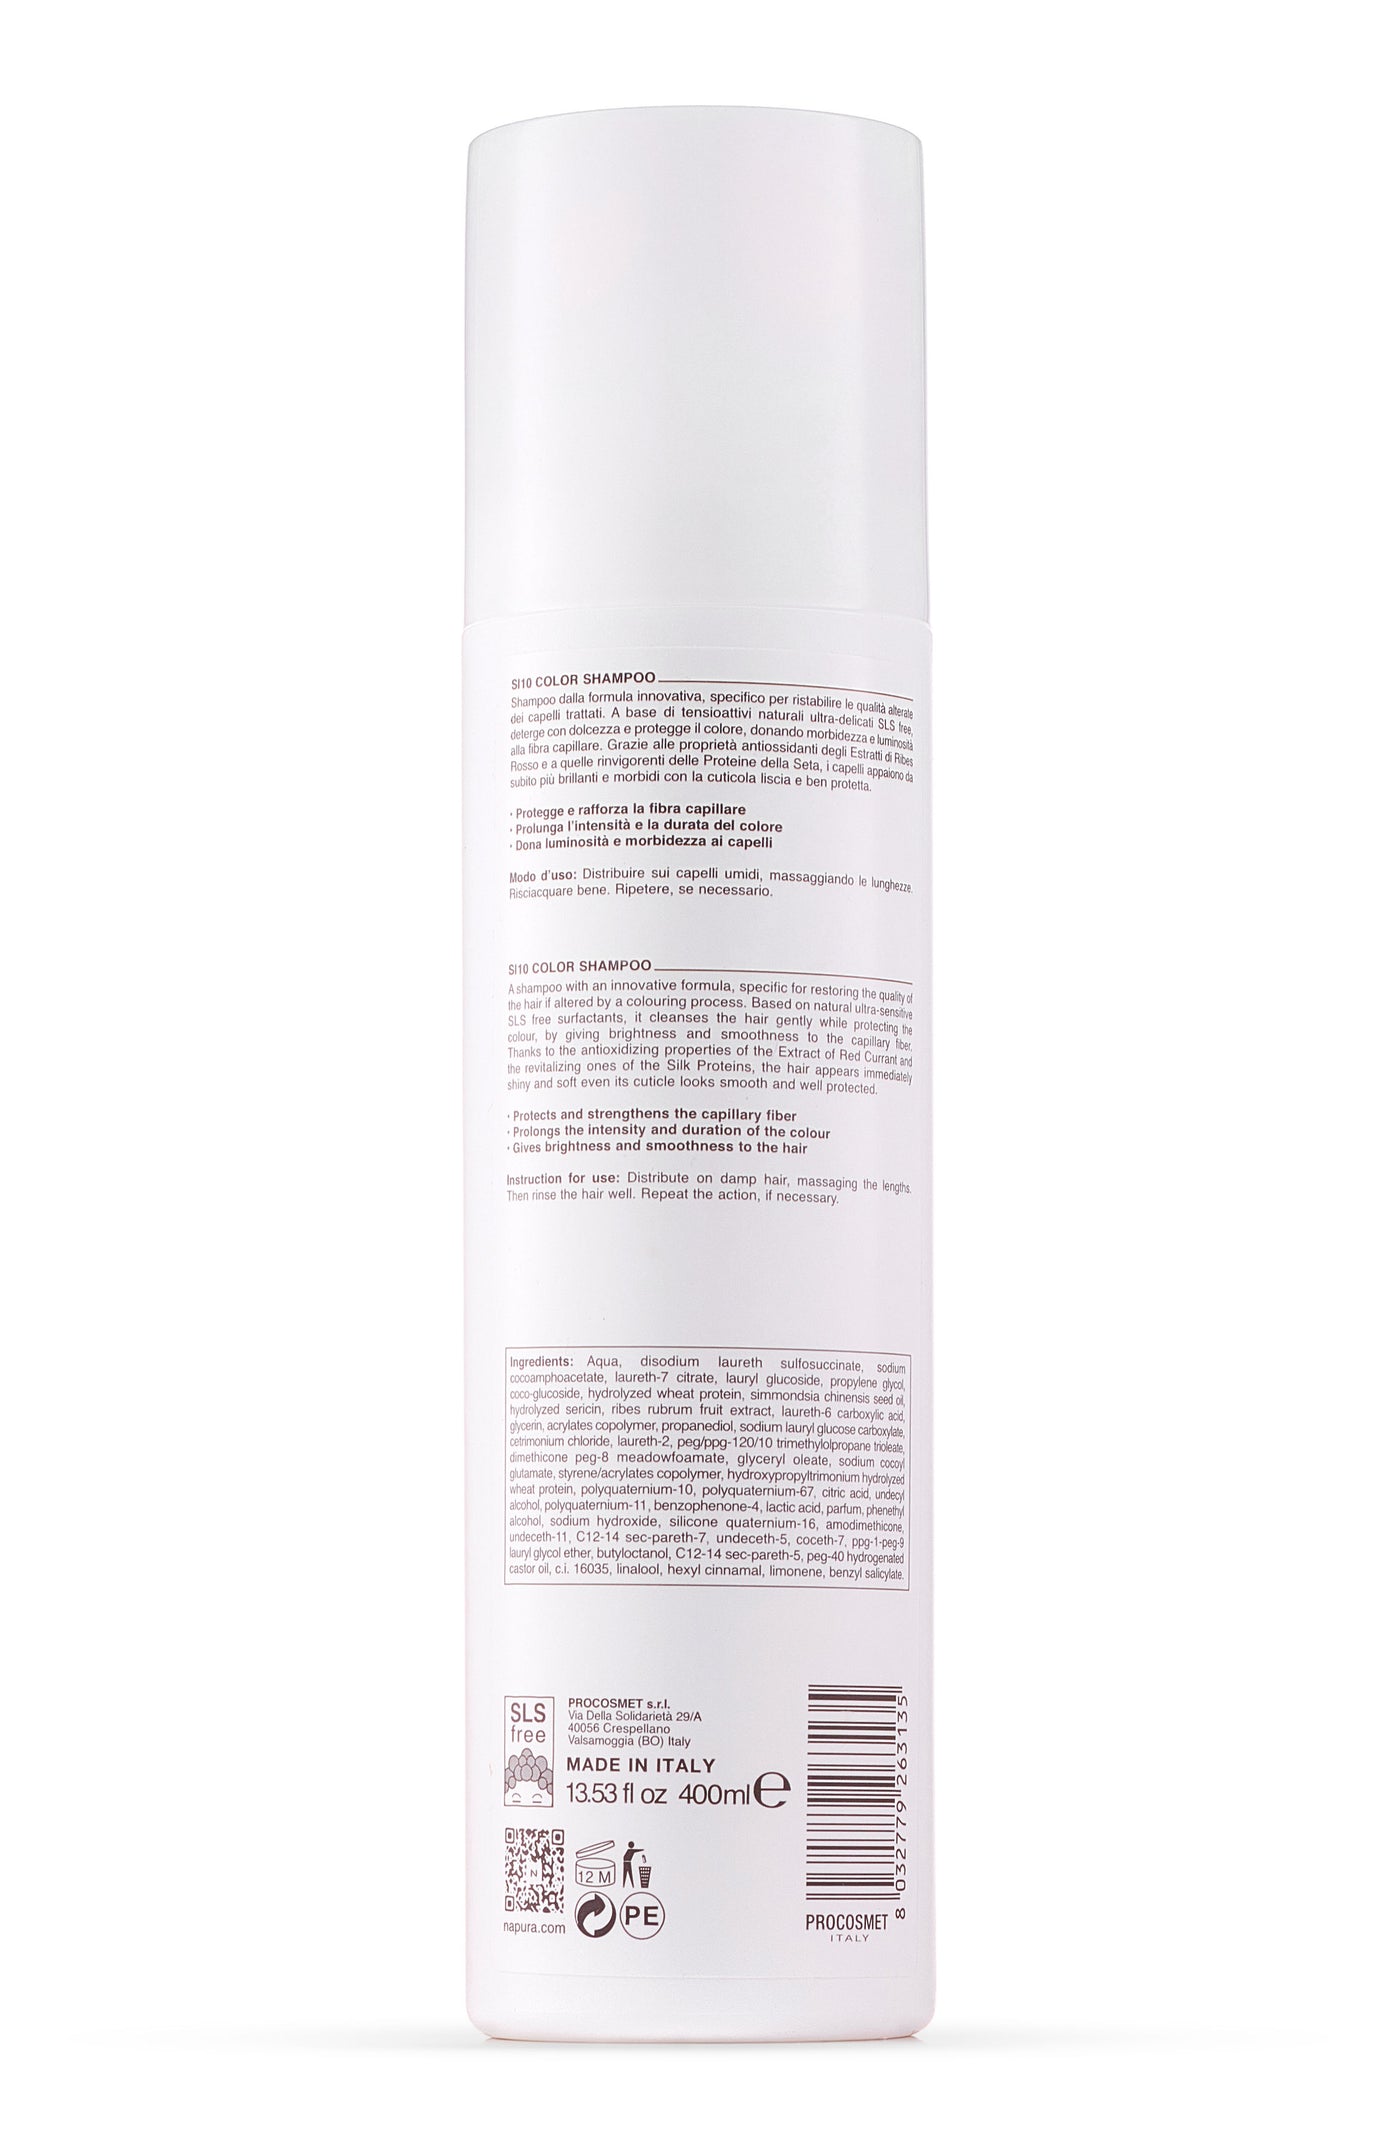 NAPURA S10 (13.53 fl oz) Professional Shampoo for Color Treated Hair